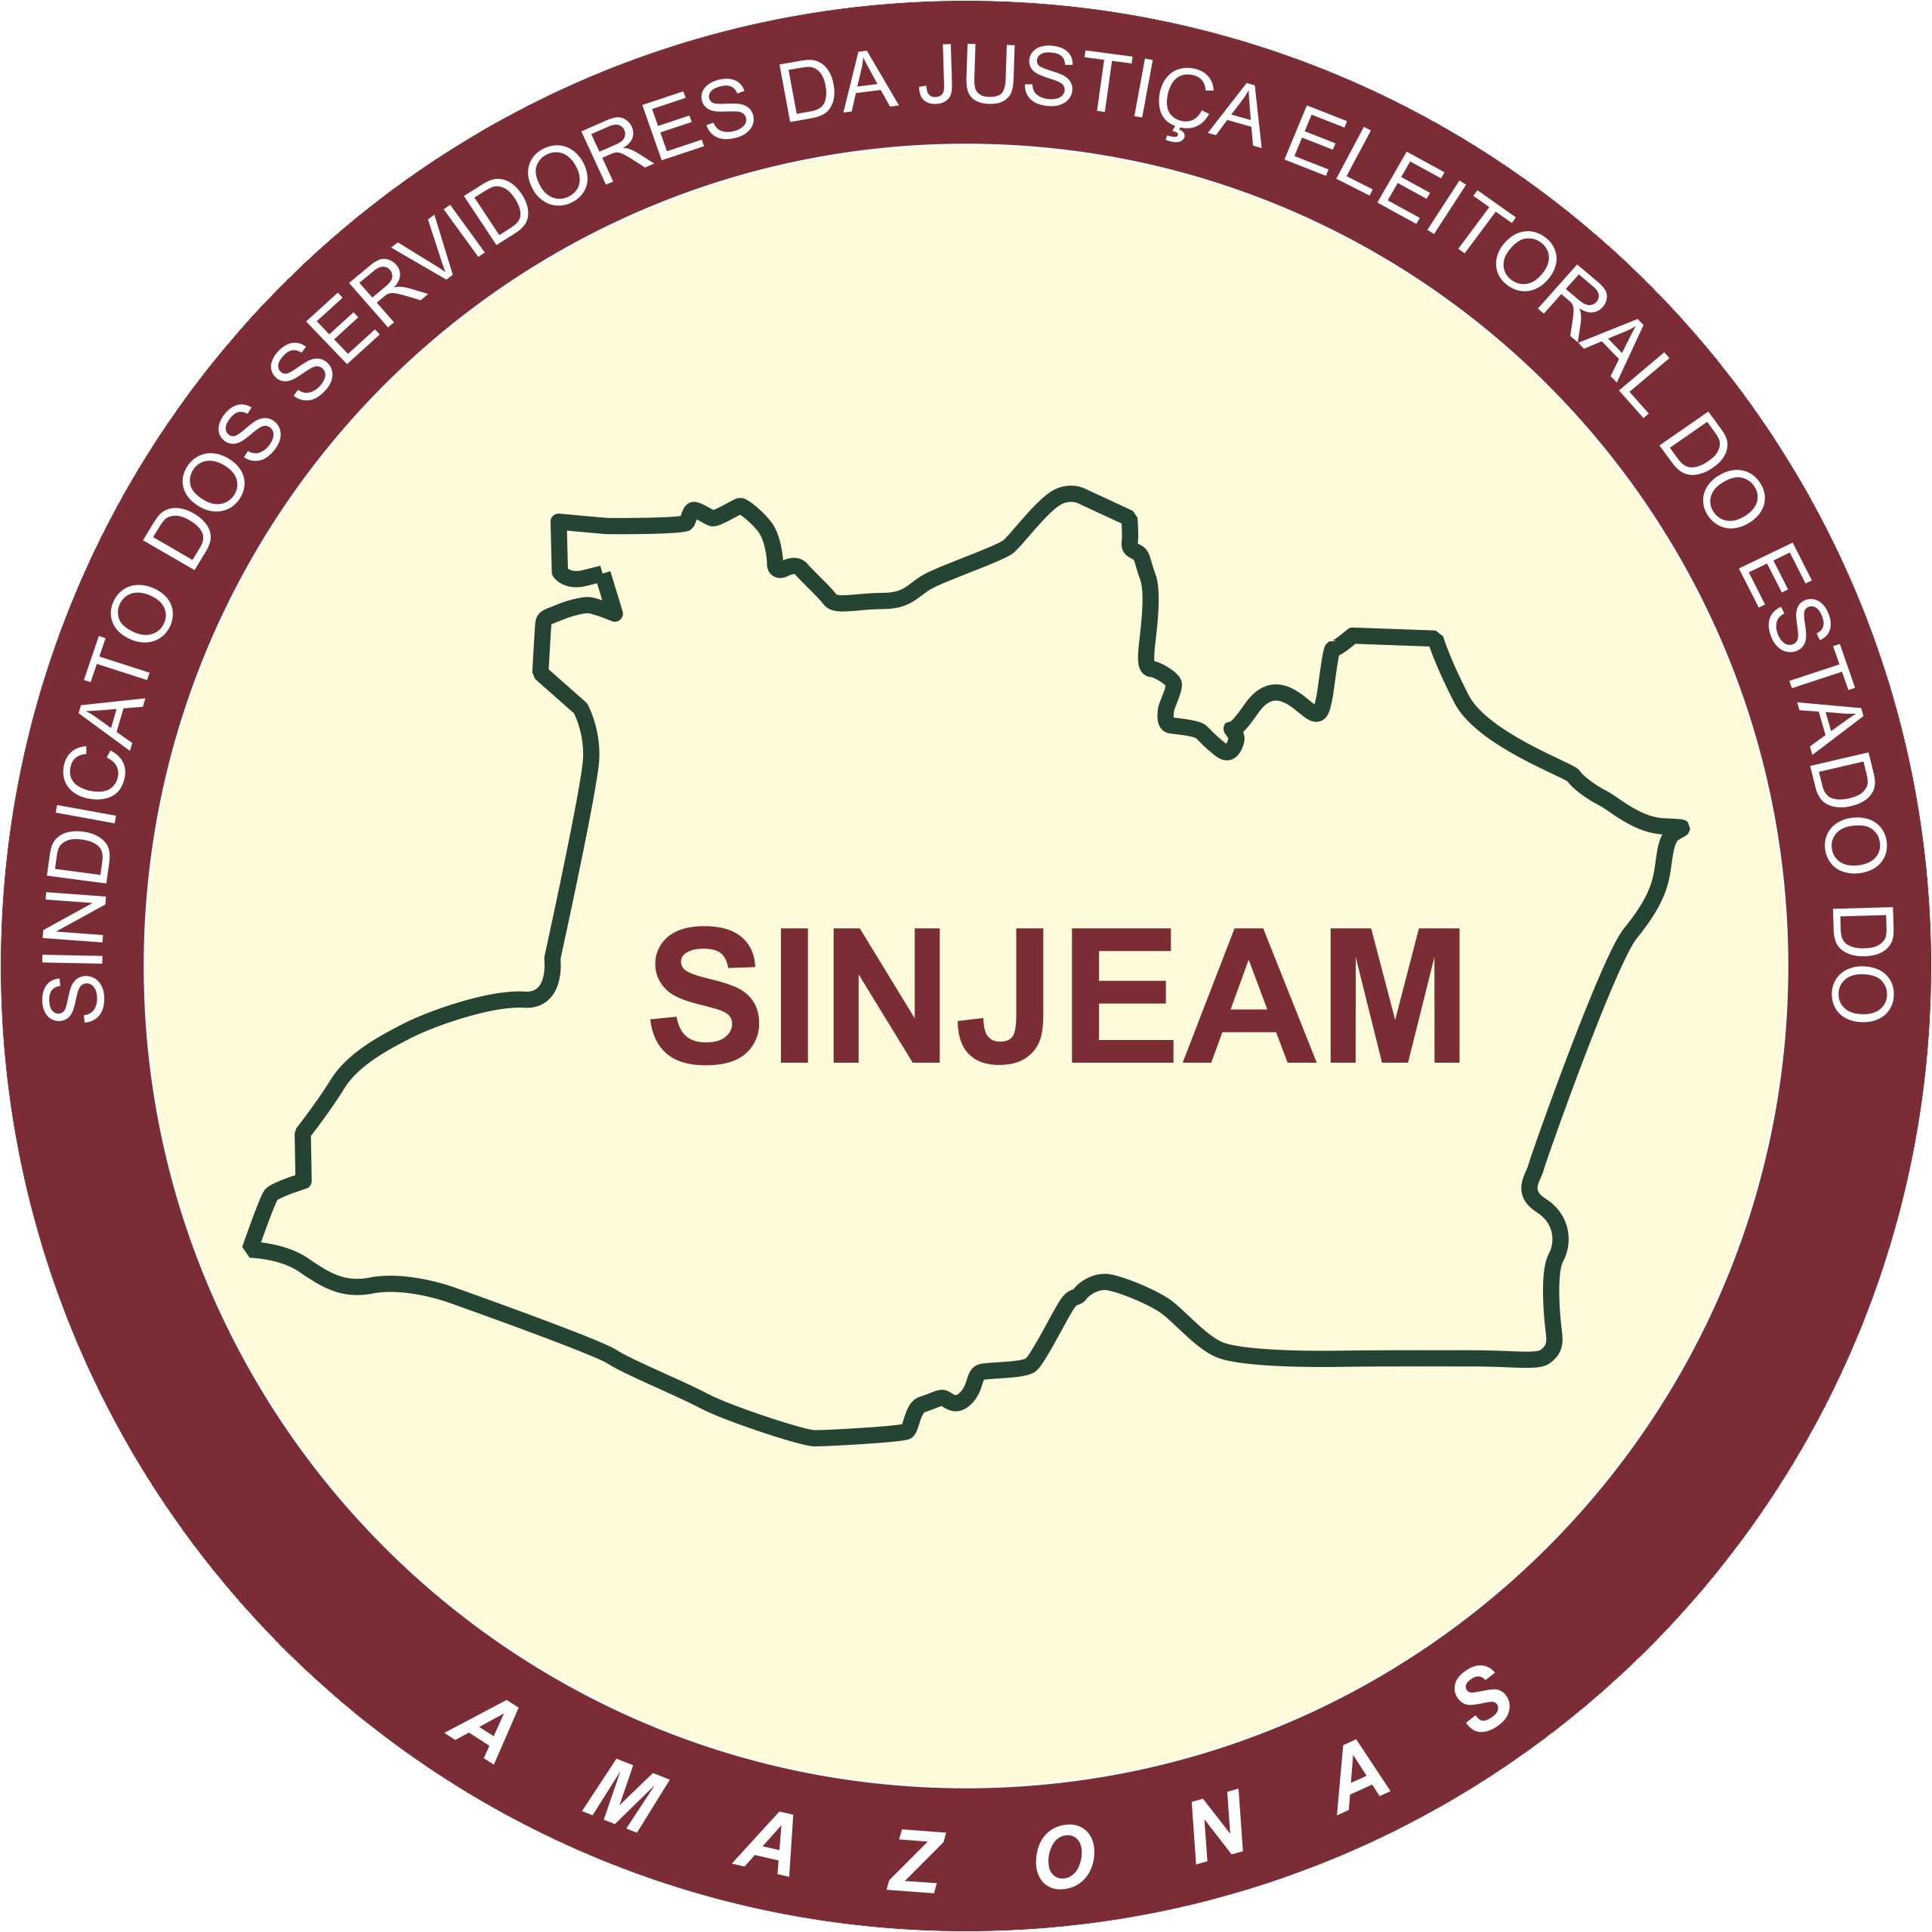 Sindicato dos Servidores da Justiça Eleitoral do Estado do Amazonas